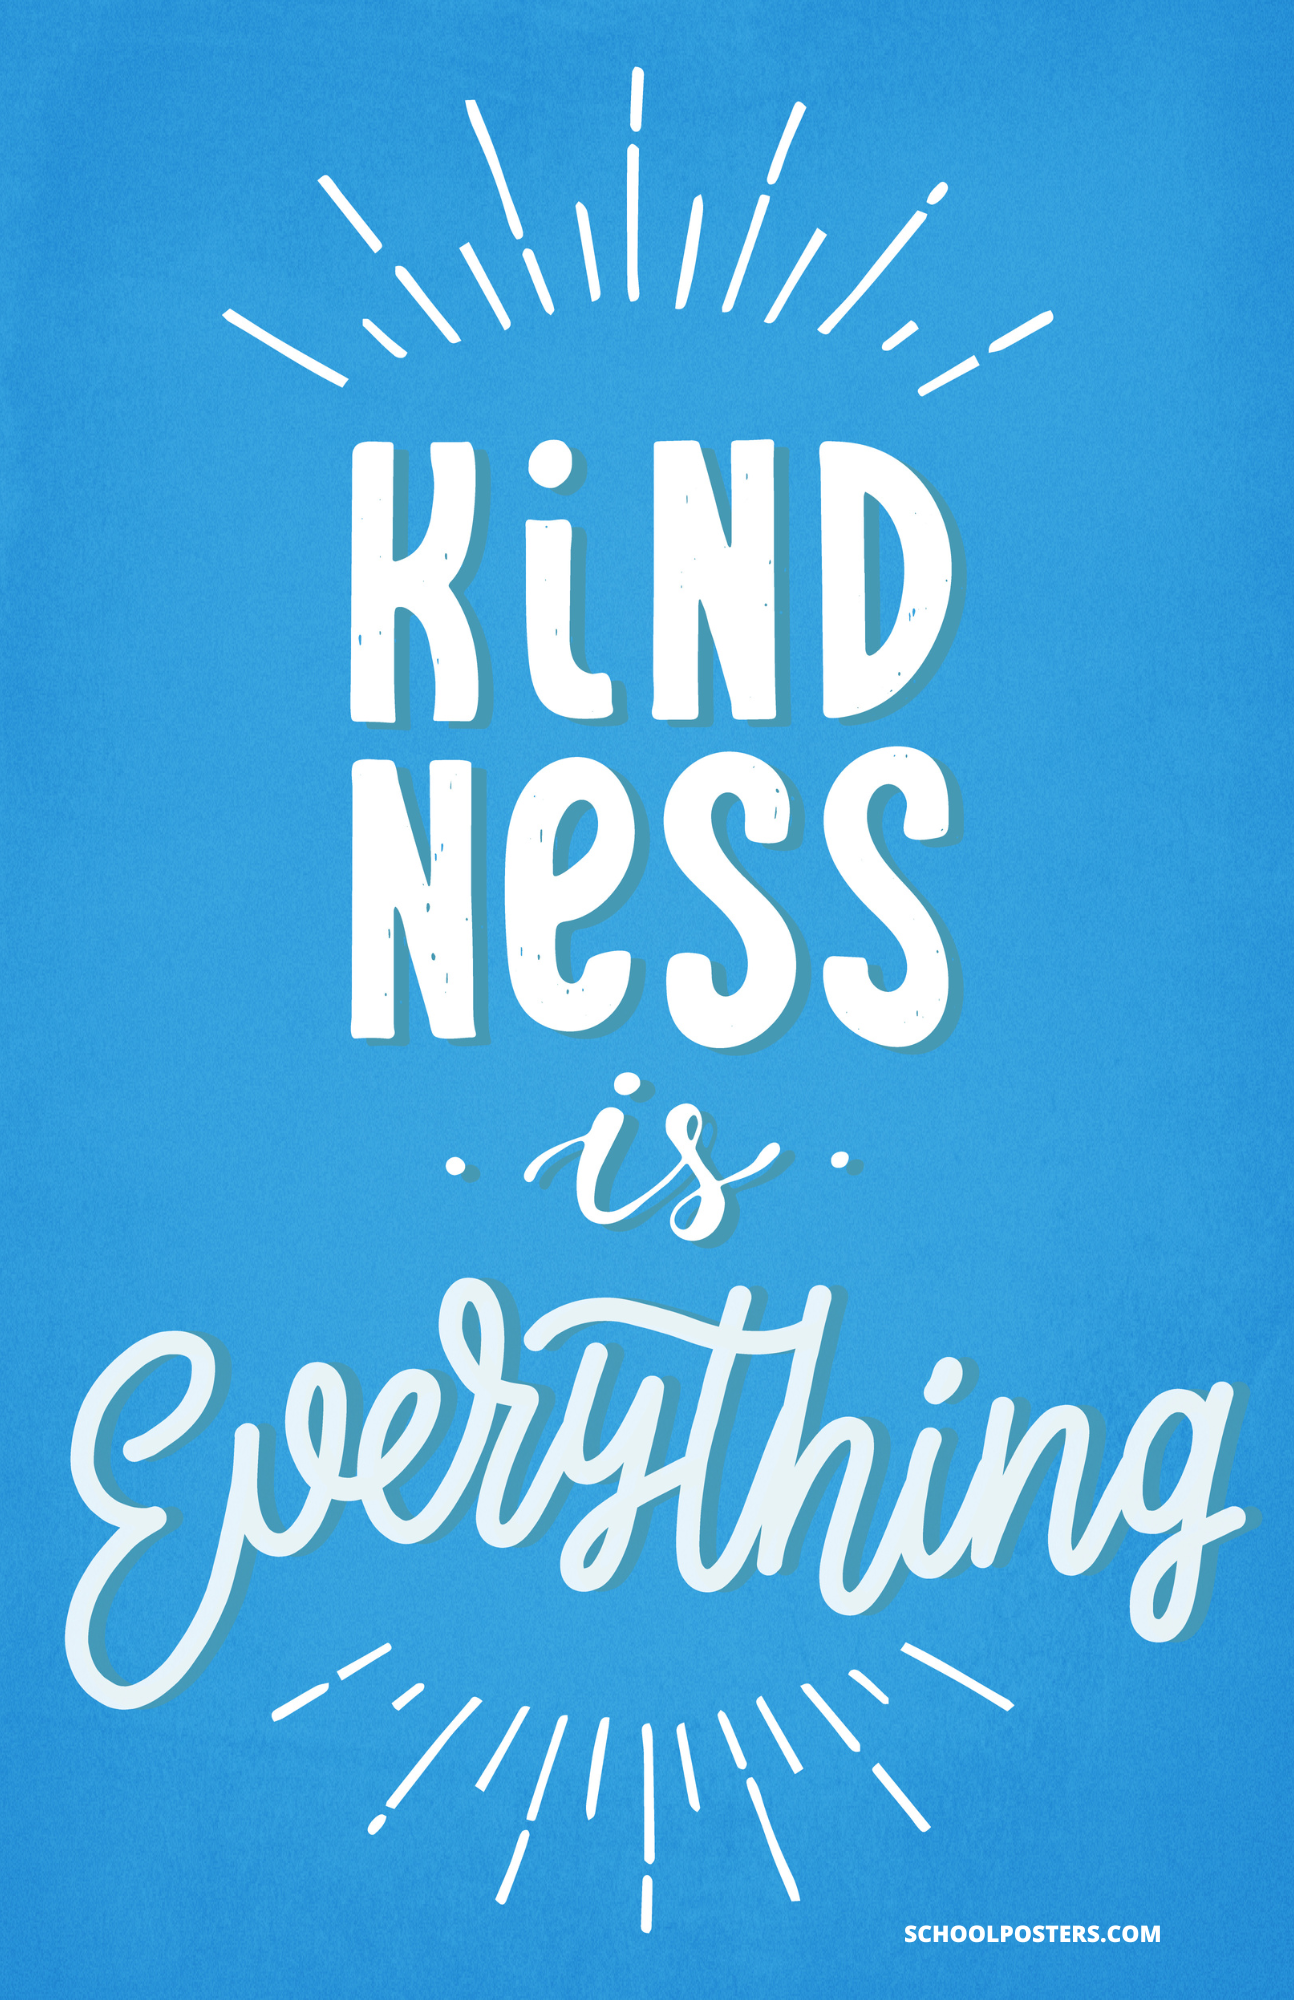 Kindness Poster